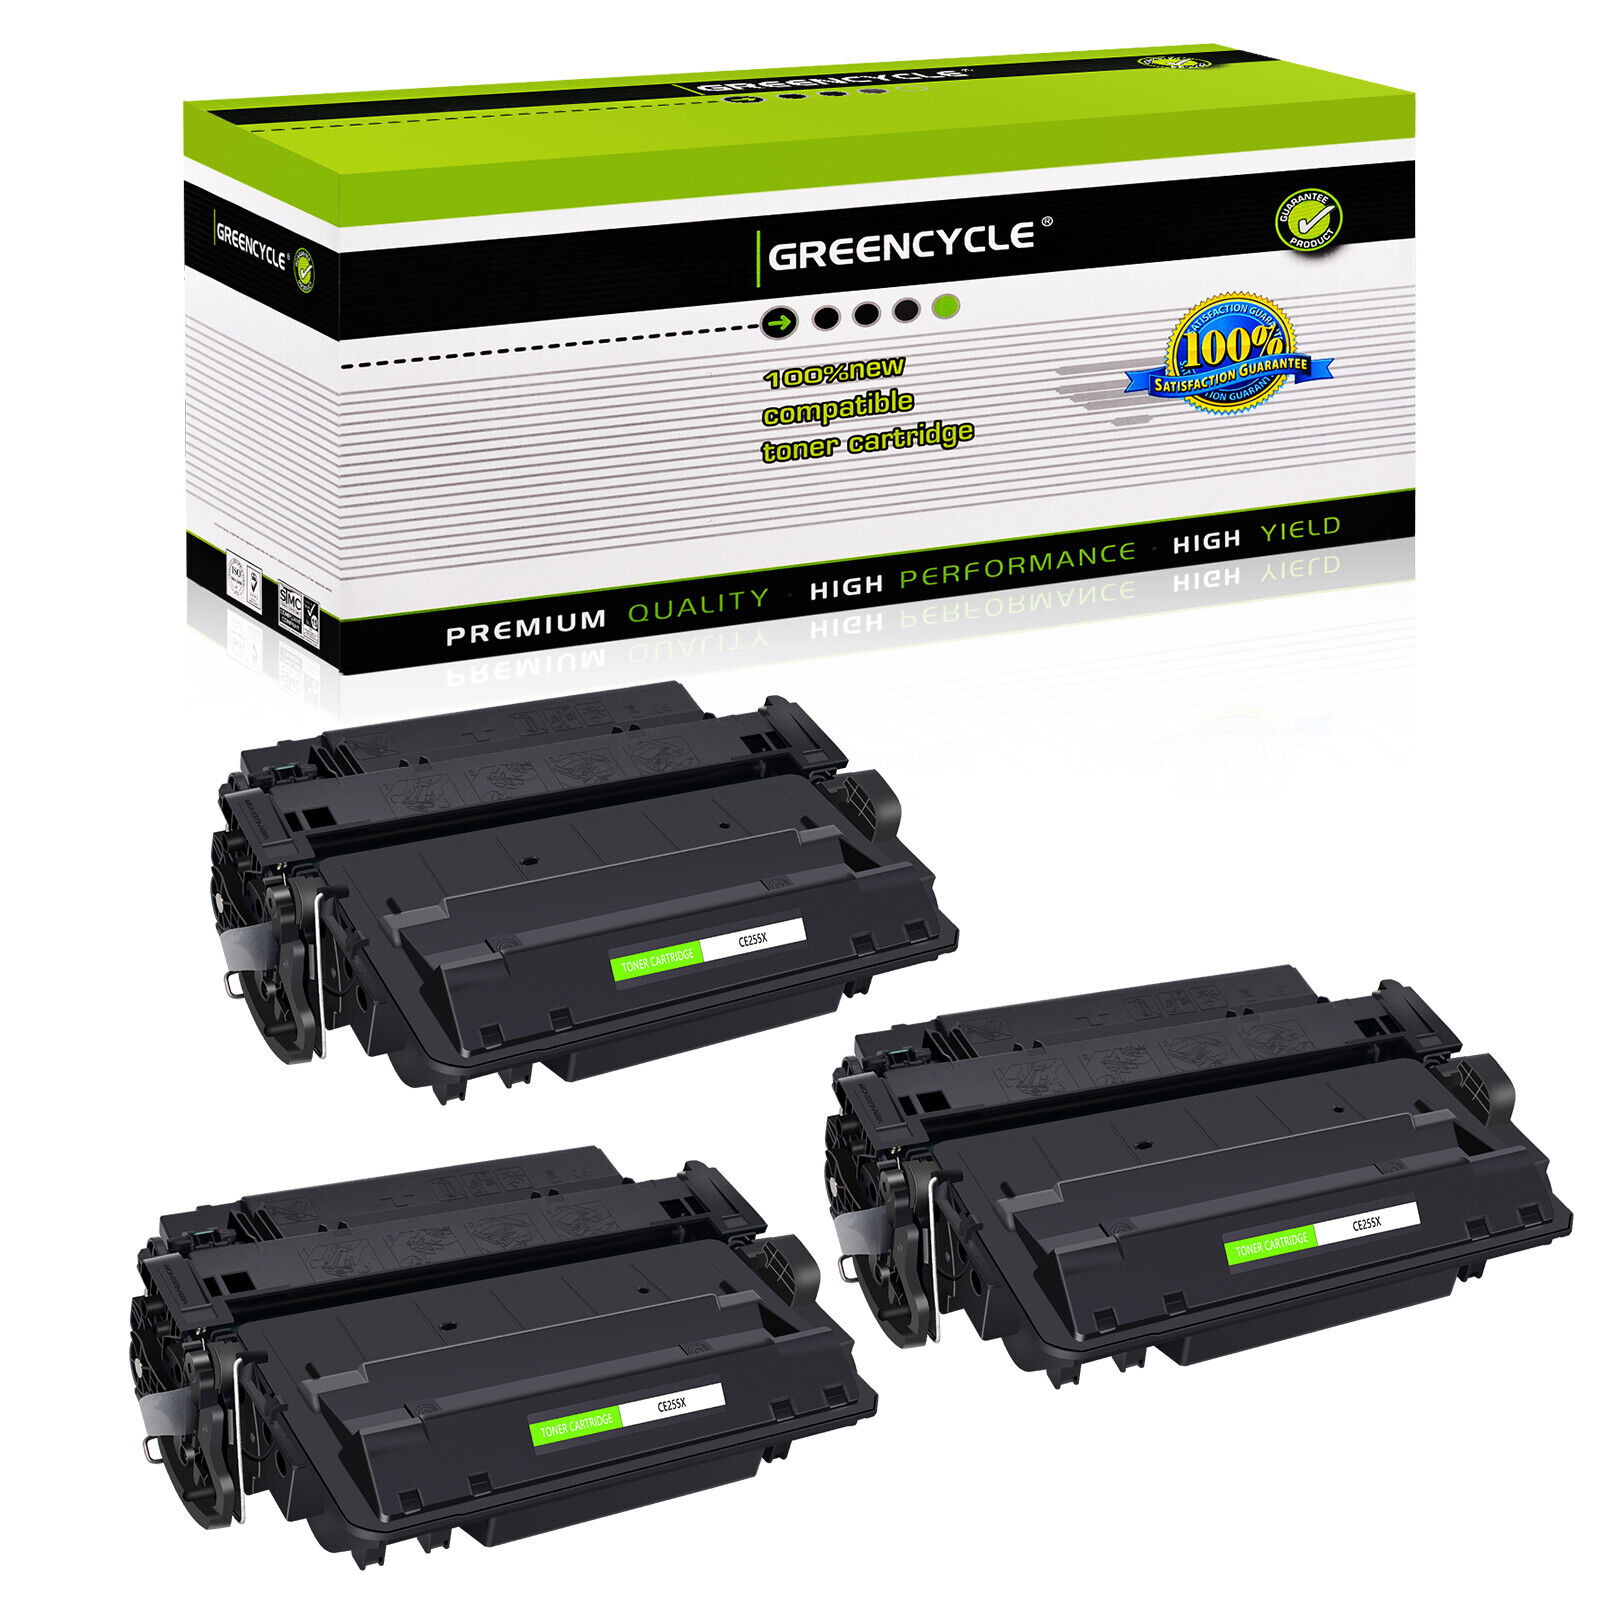 3x Toner Fits HP CE255X 55X LaserJet Pro 500 MFP M521DN M521DW M521dx Printer